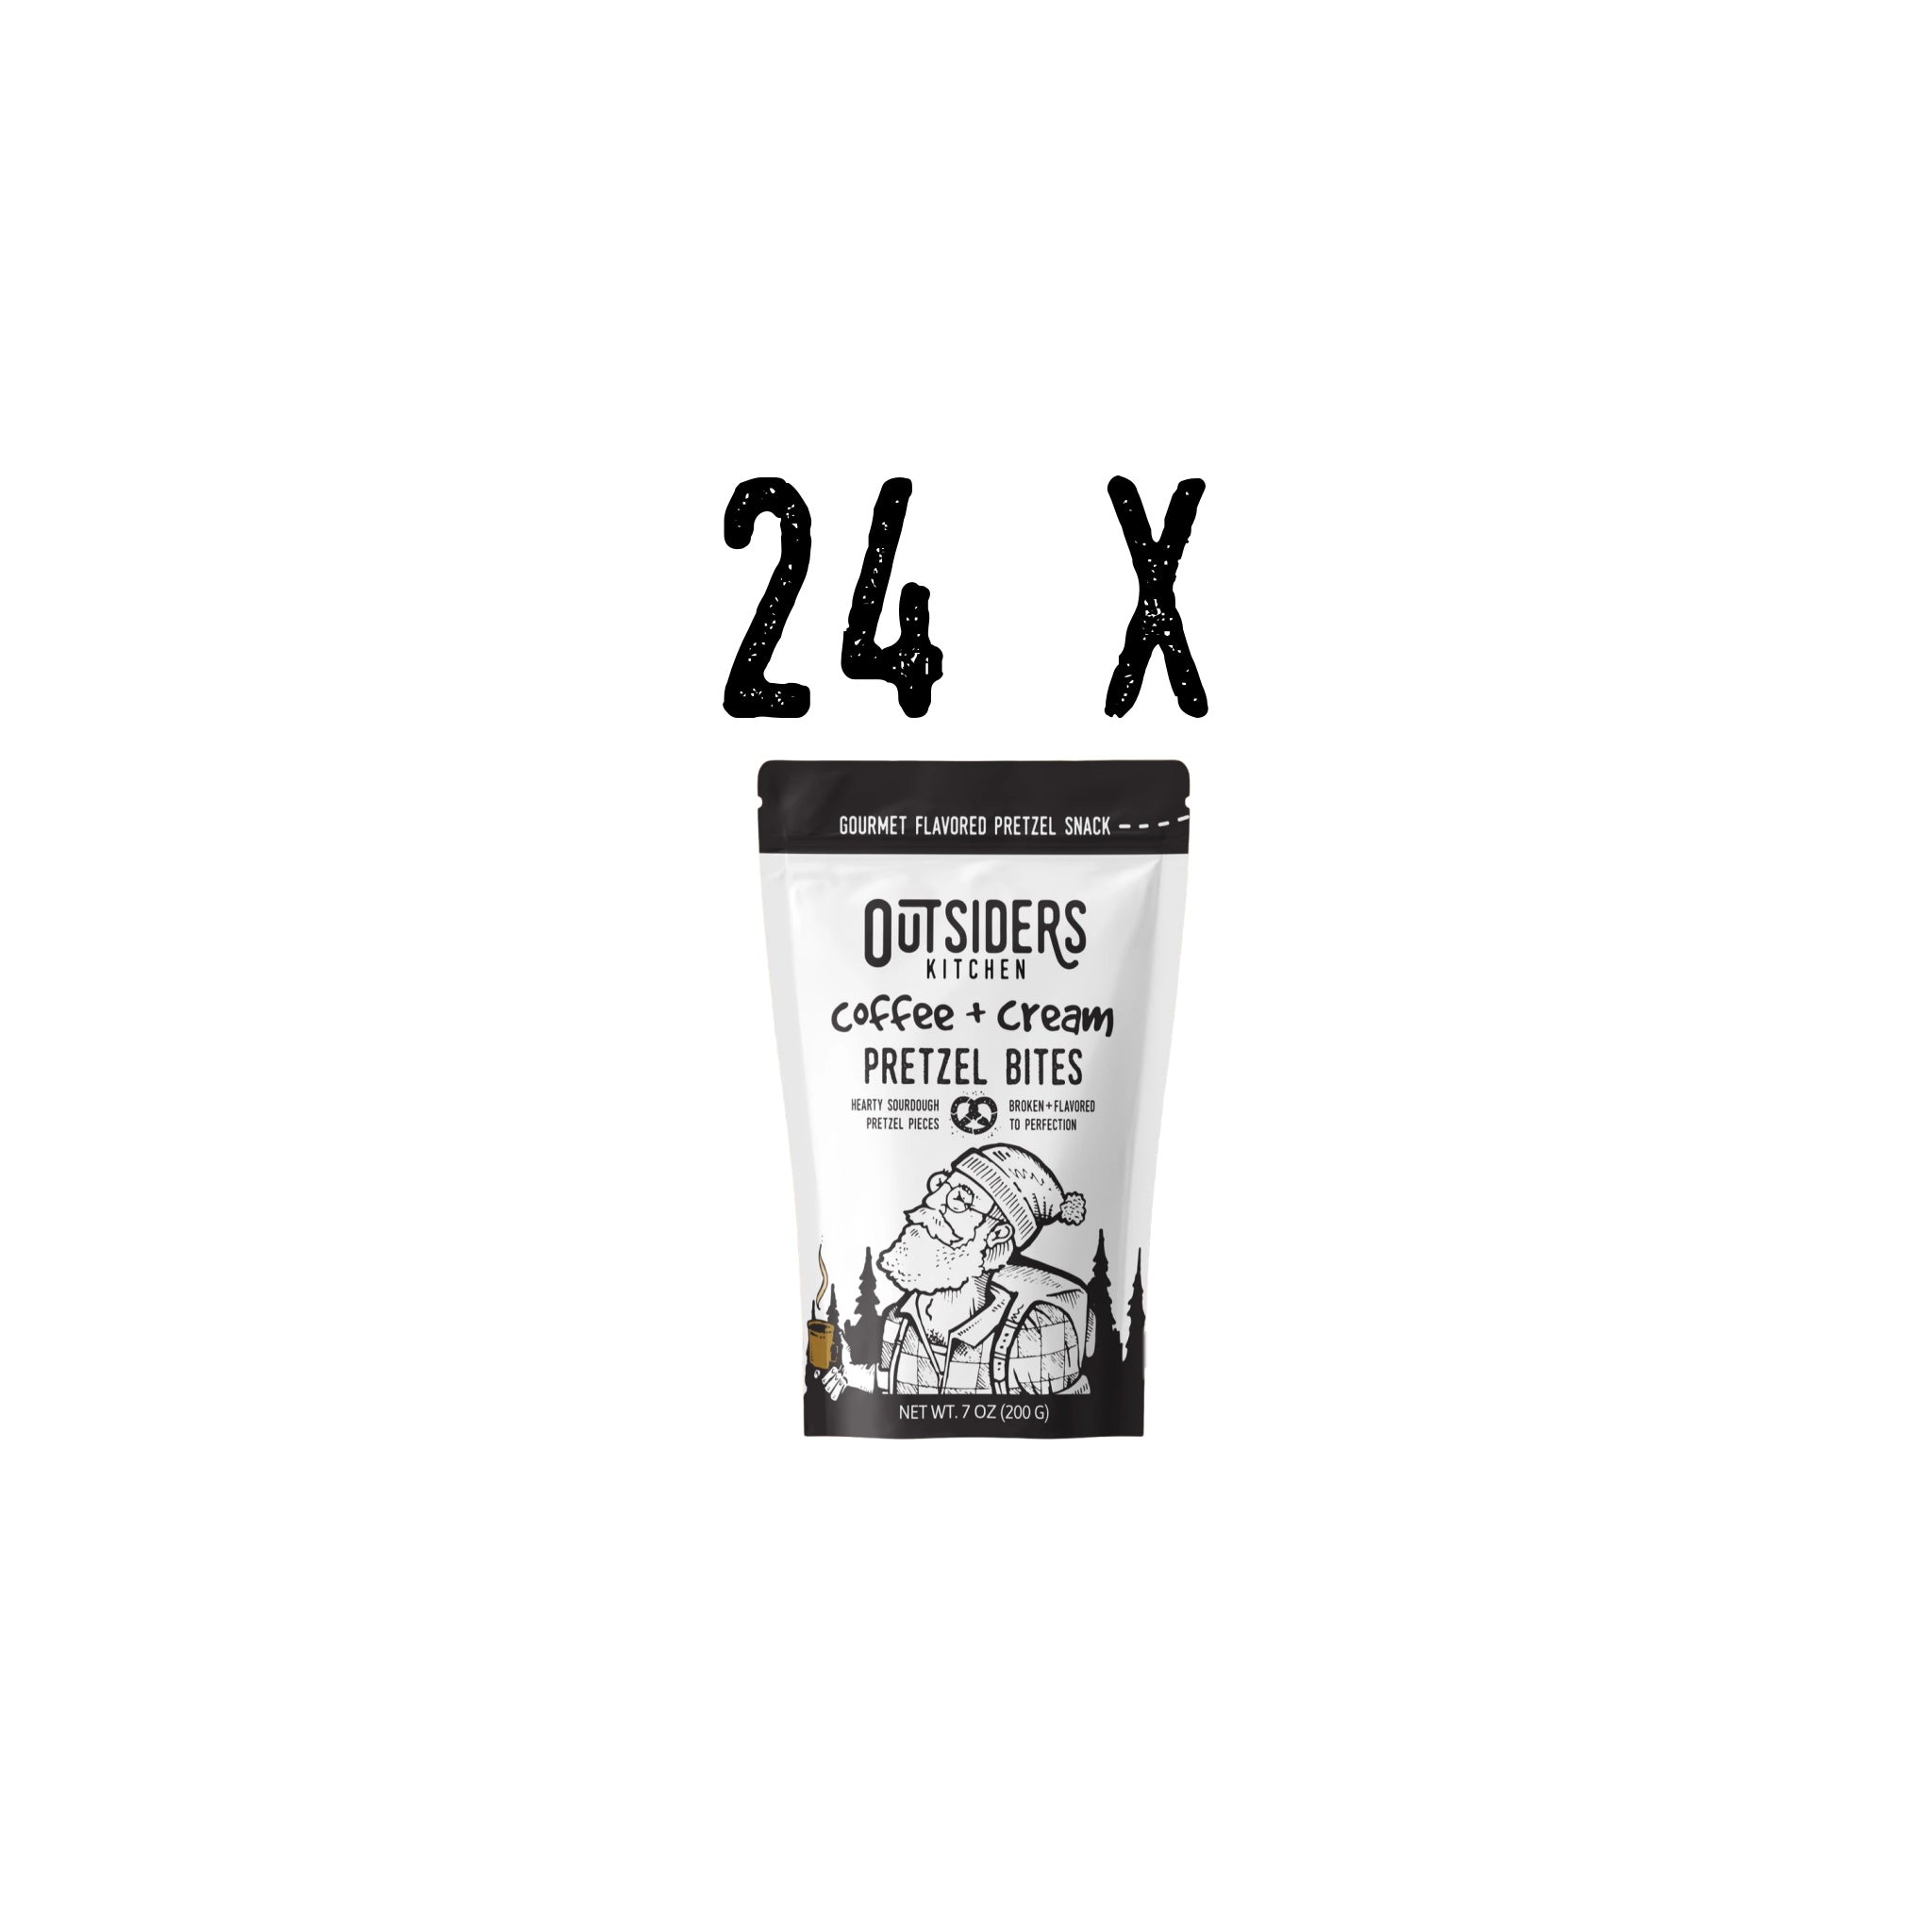 Coffee + Cream Pretzel Bites (24 Count Case of 7 oz. Bags)